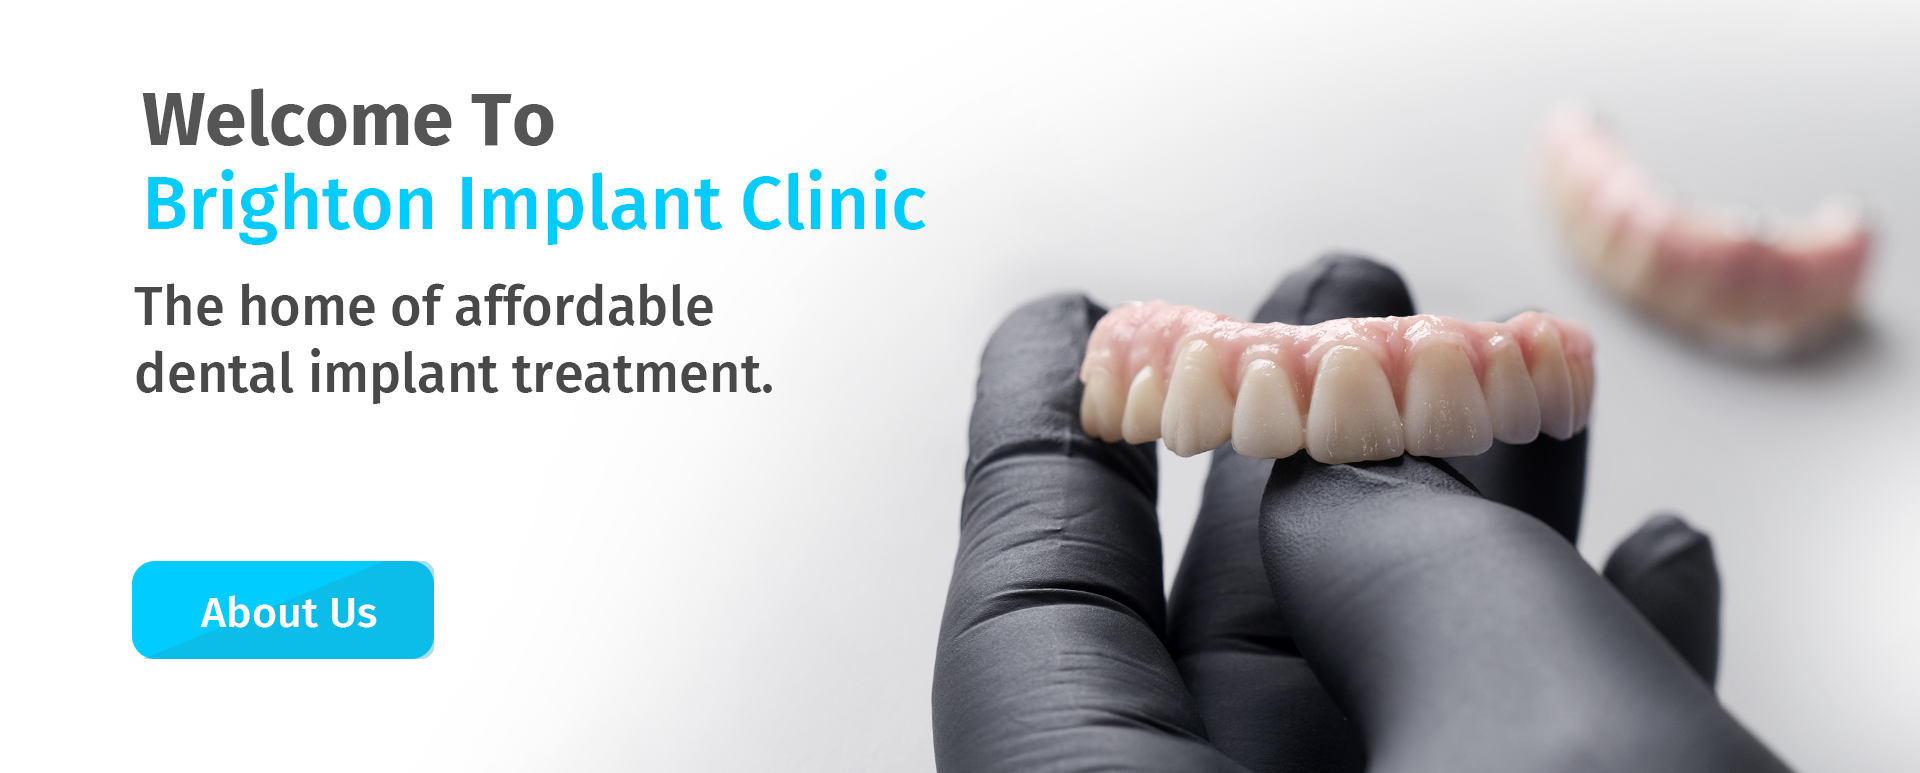 Brighton Implant Clinic - Dental implant treatment